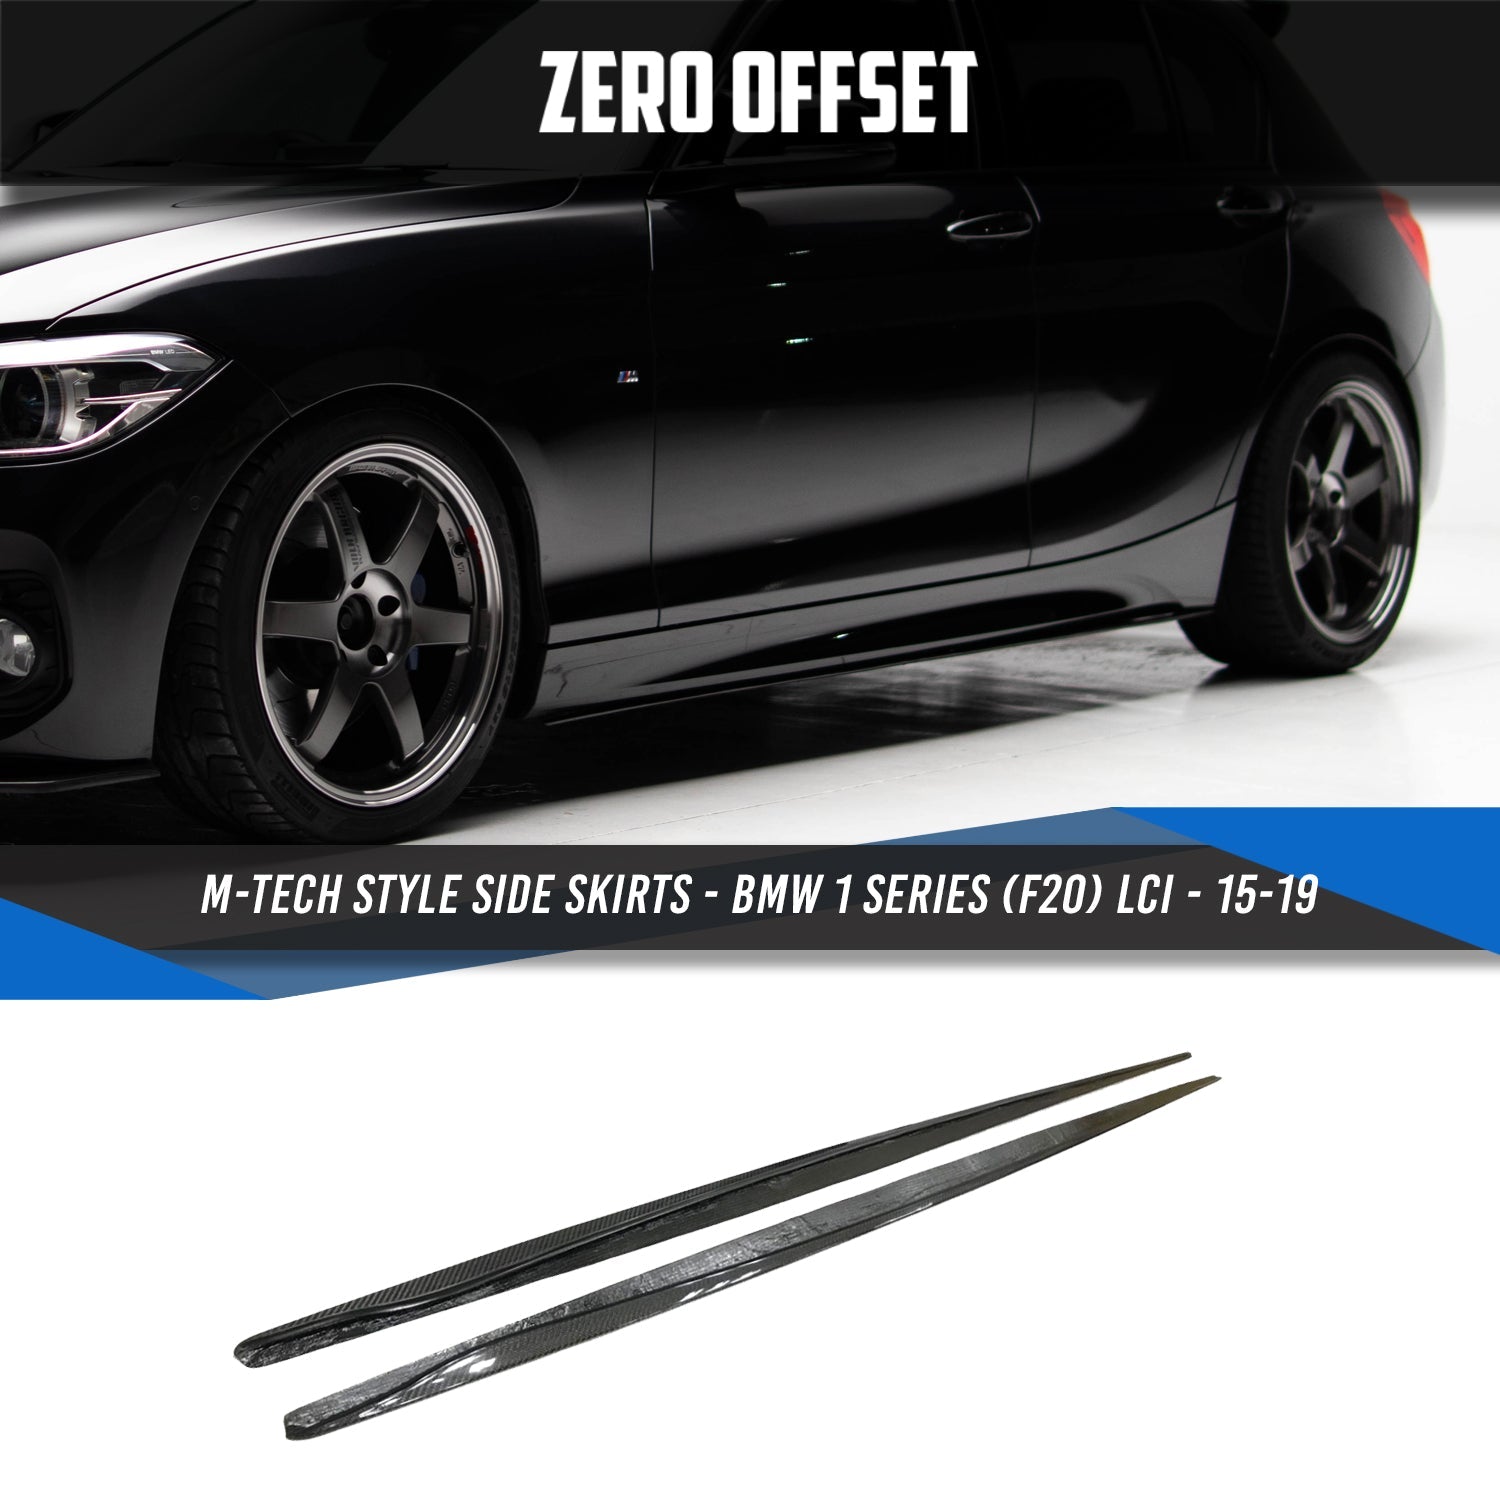 Zero Offset  M-Tech Style Side Skirts (Carbon Fibre) for BMW F20 LCi - 2015-19 - MODE Auto Concepts